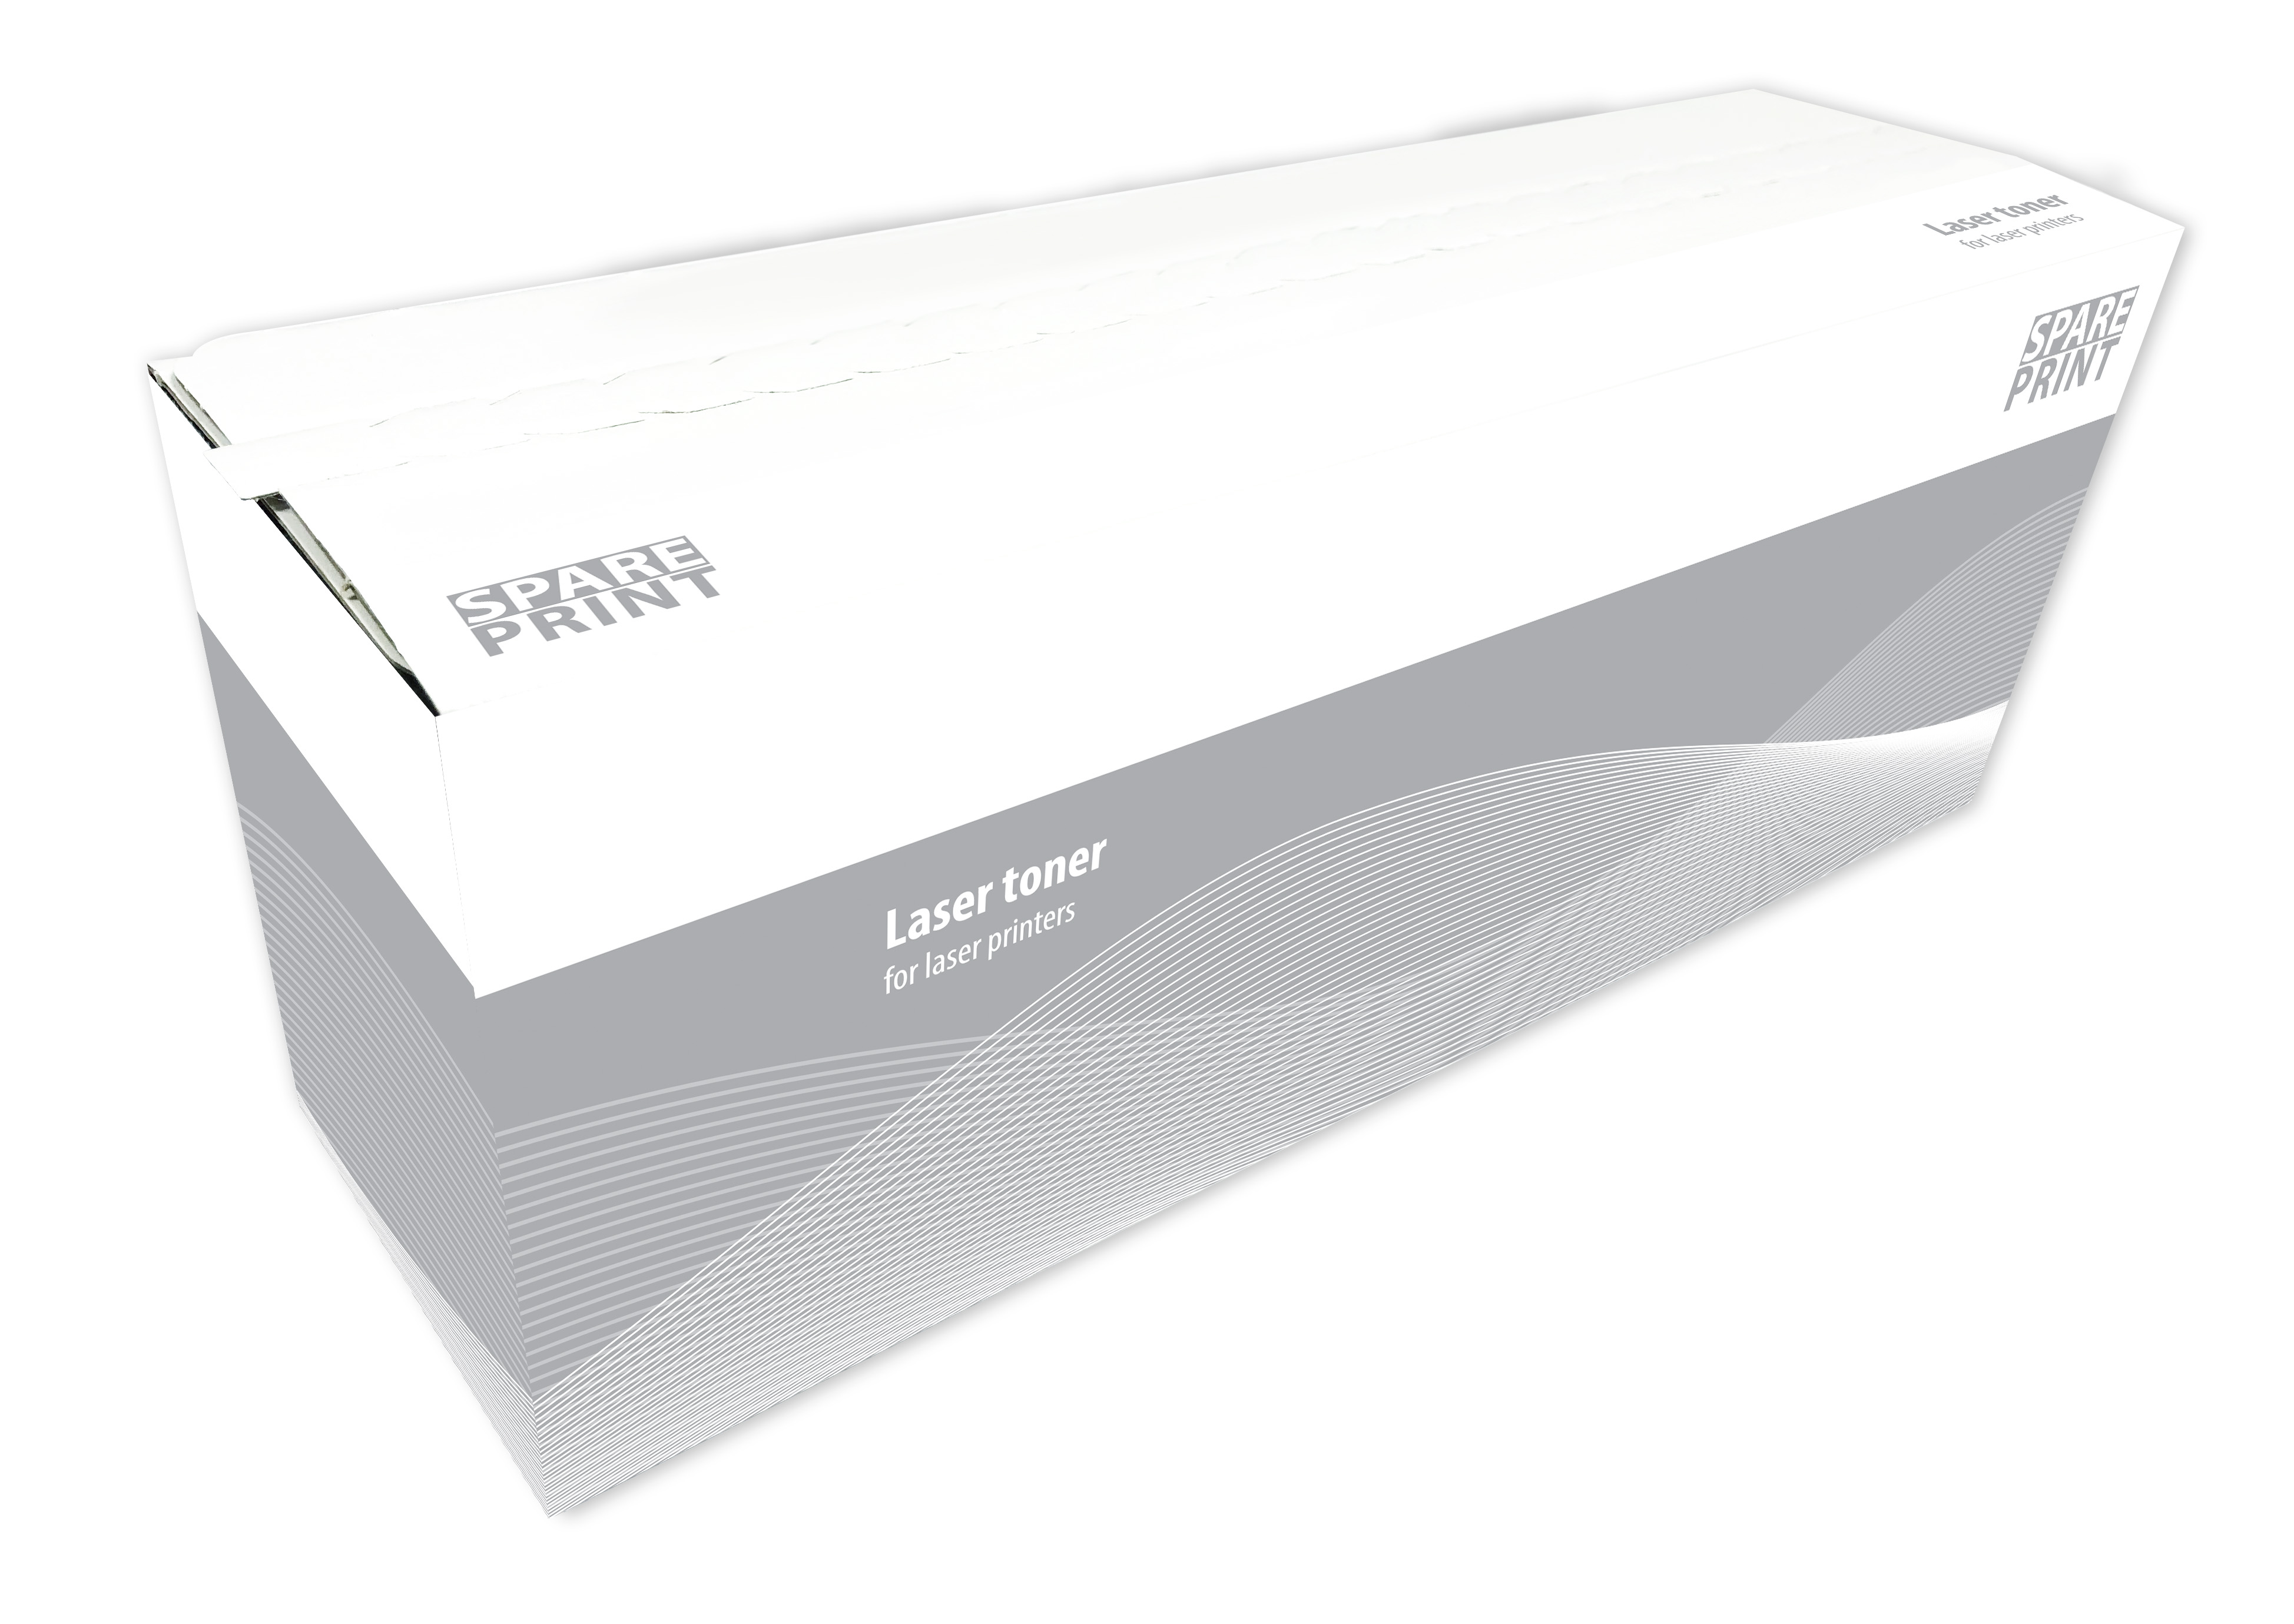 SPARE PRINT kompatibilní toner 106R02763 Black pro tiskárny Xerox